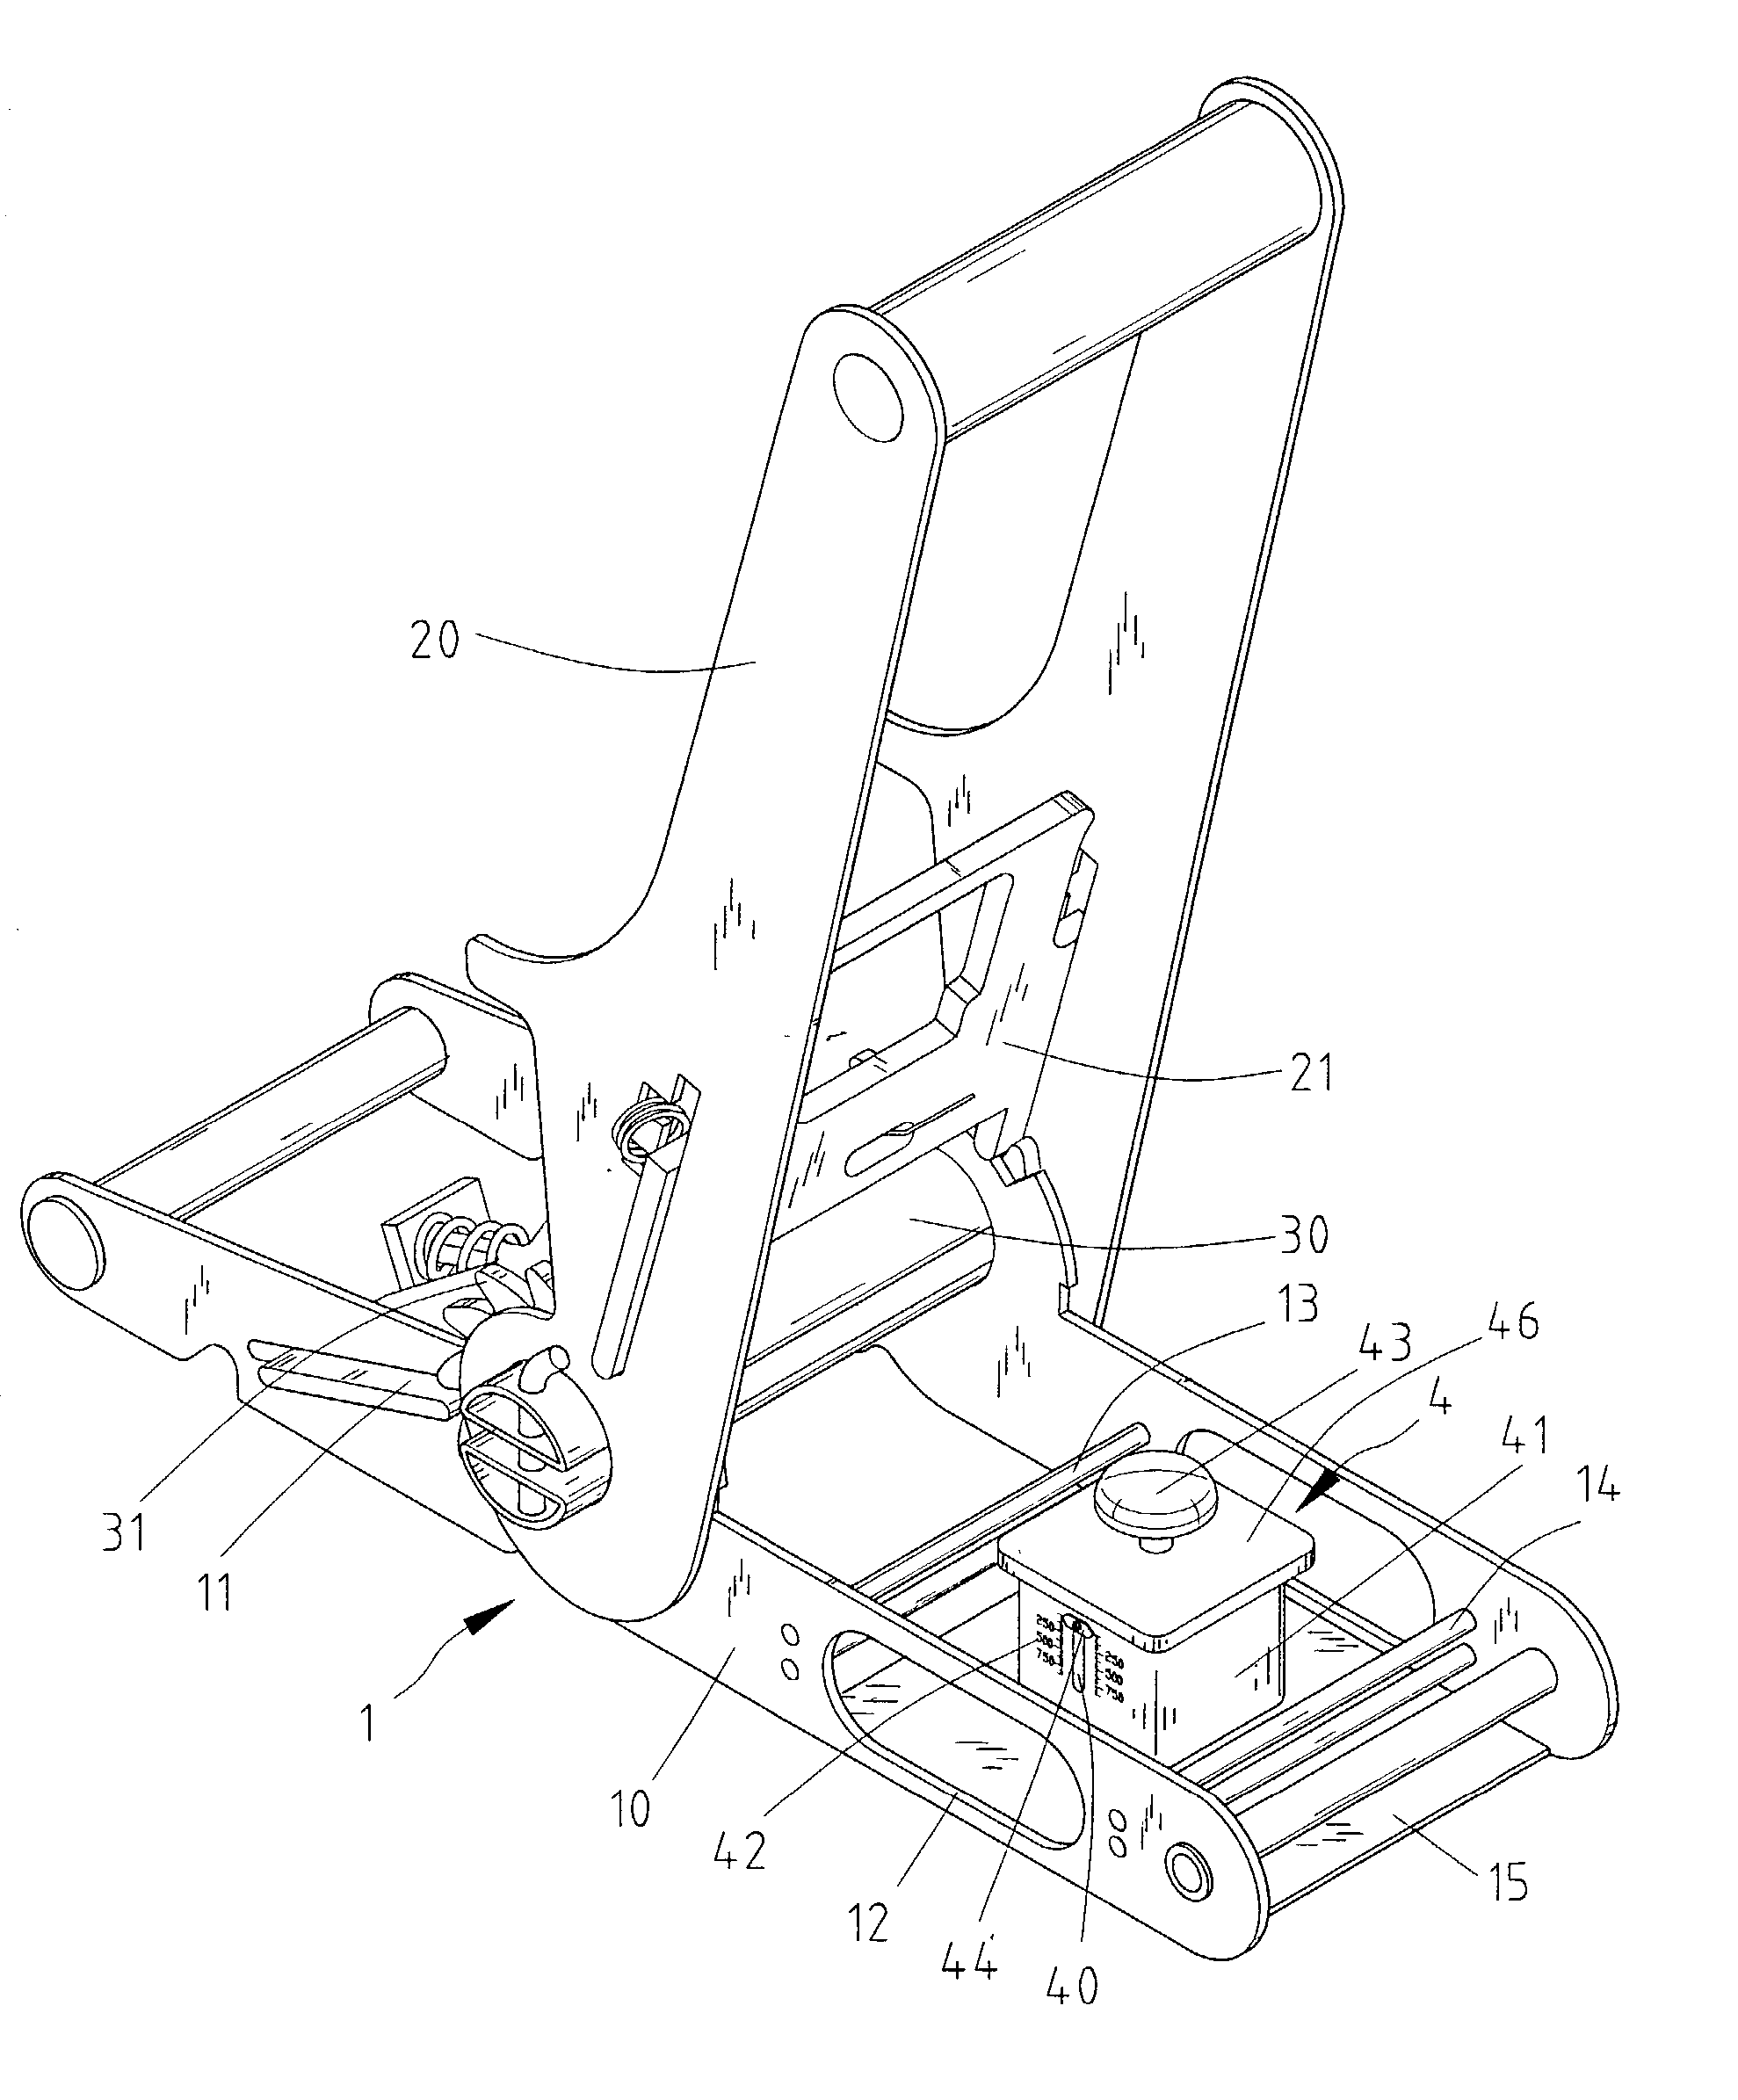 Force-indicating strap fastener